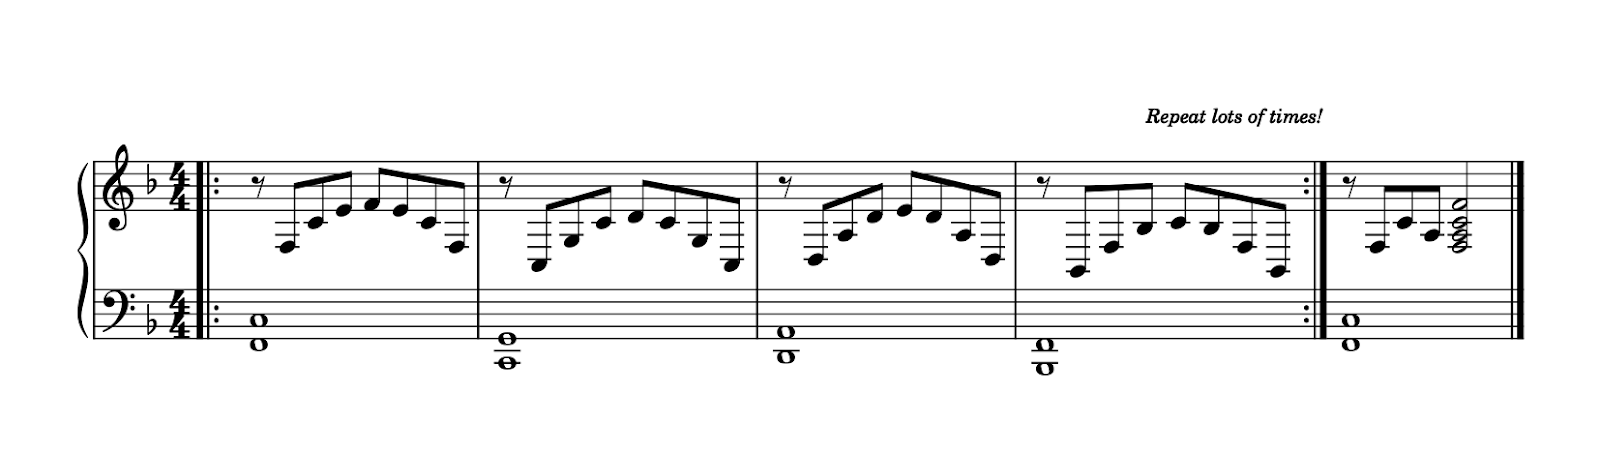 teaching piano scales using improv